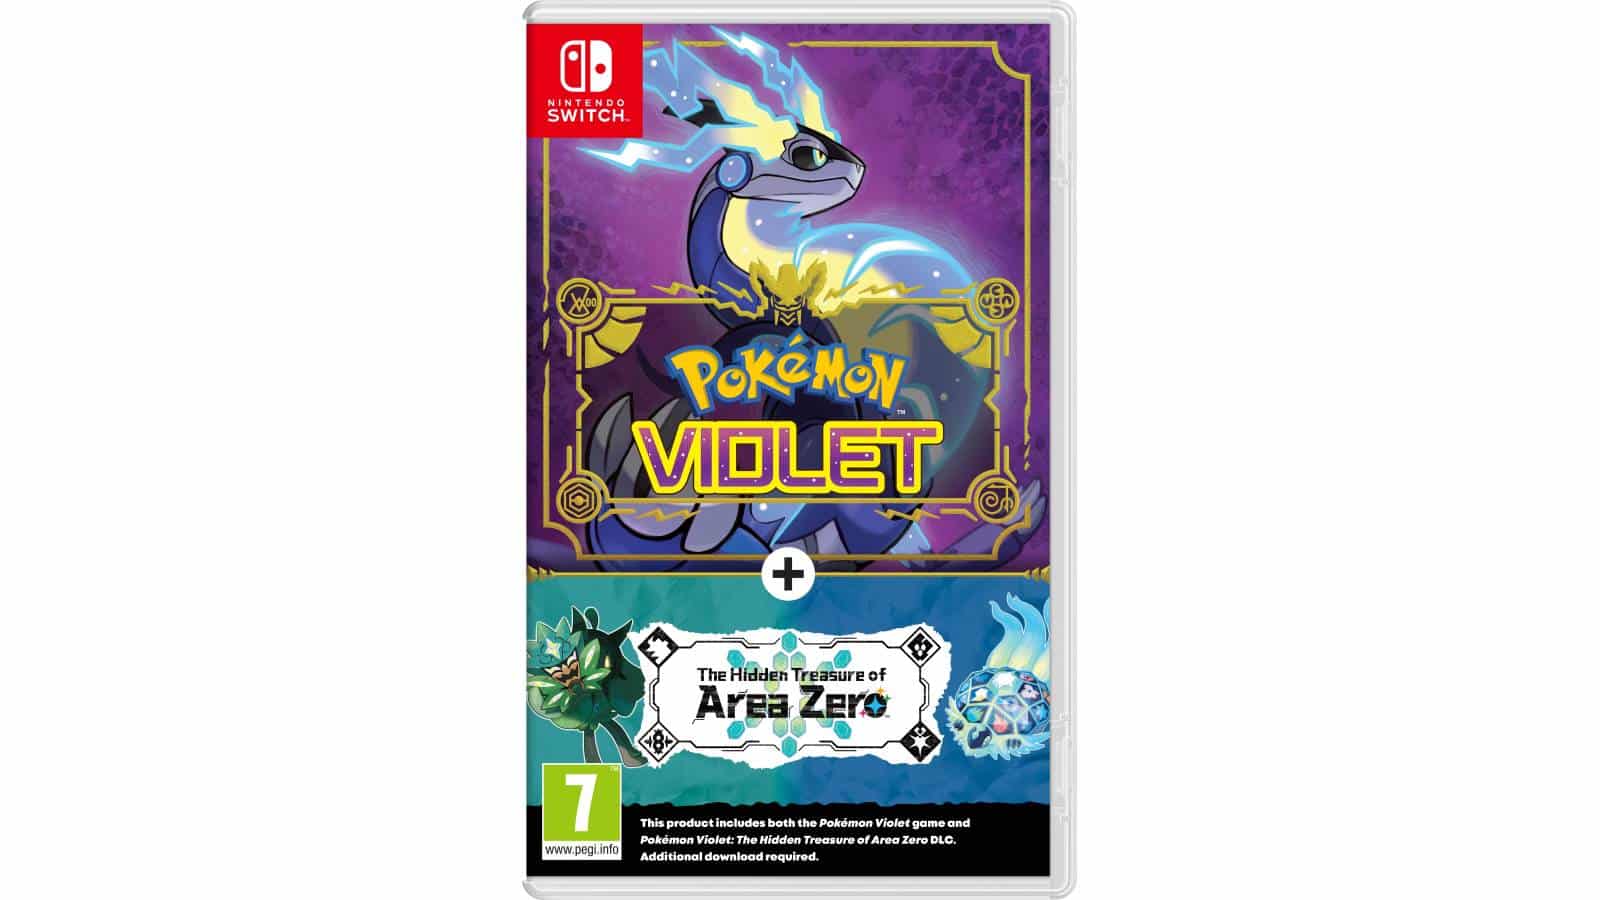 Pokémon Violet+ The Hidden Treasure of Area Zero